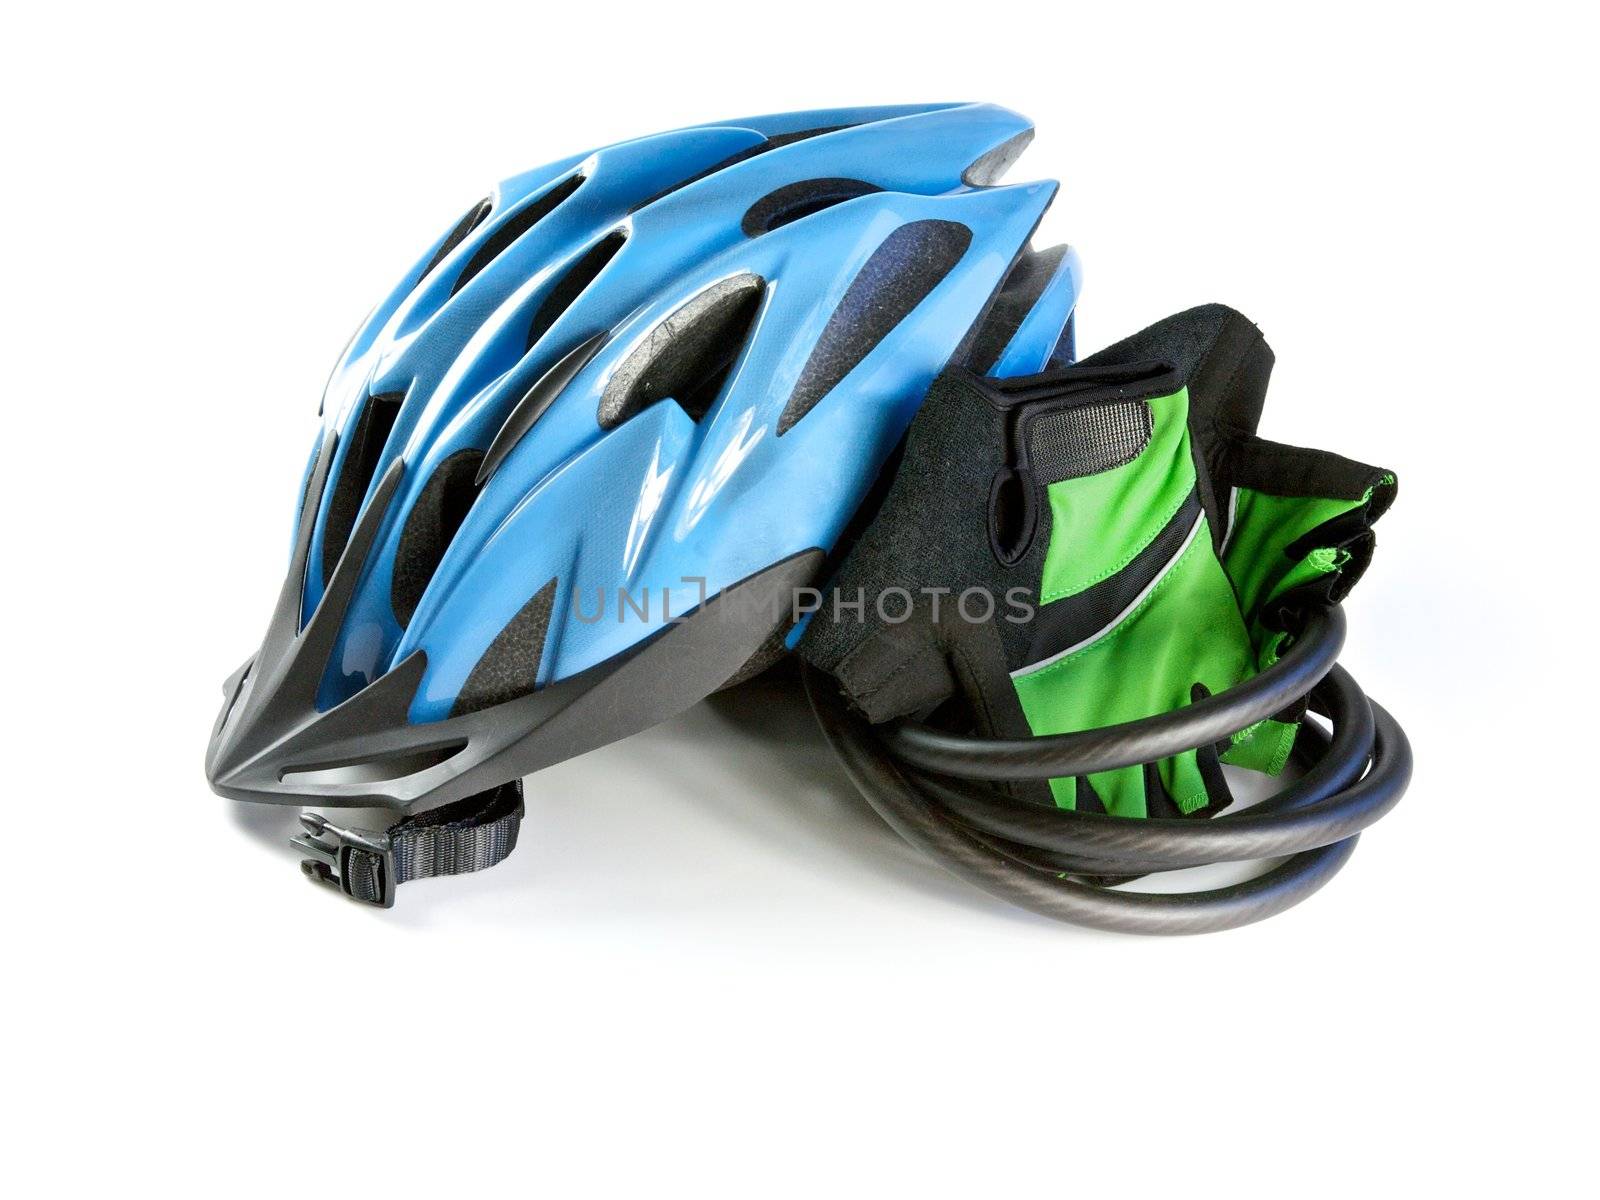 Helmet, Cycling by instinia